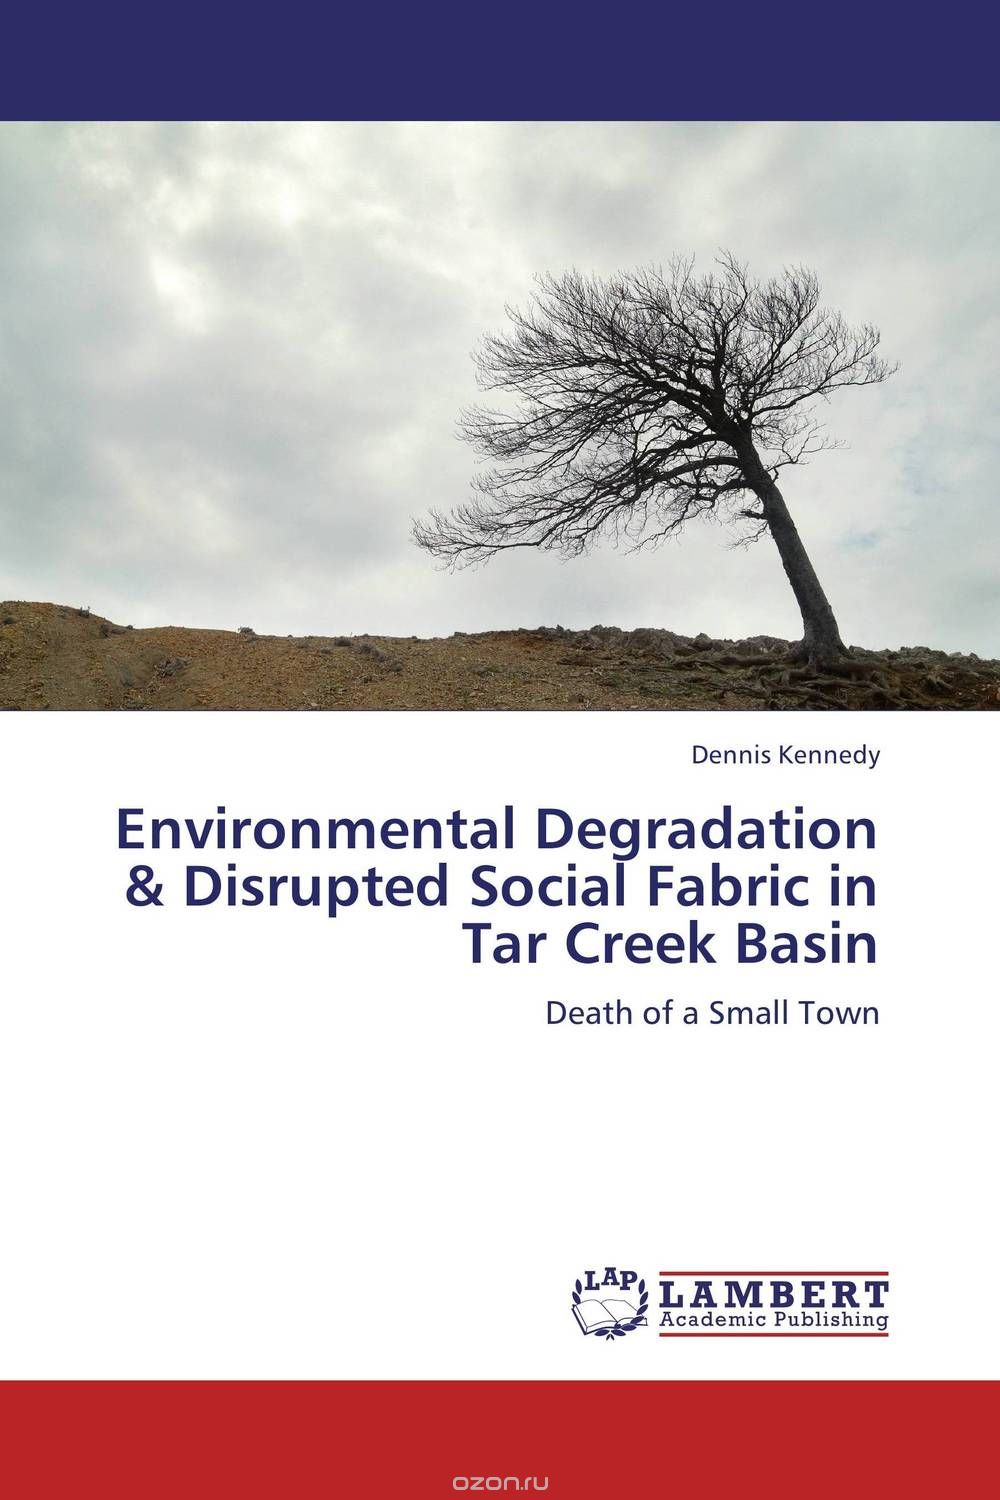 Скачать книгу "Environmental Degradation & Disrupted Social Fabric in Tar Creek Basin"